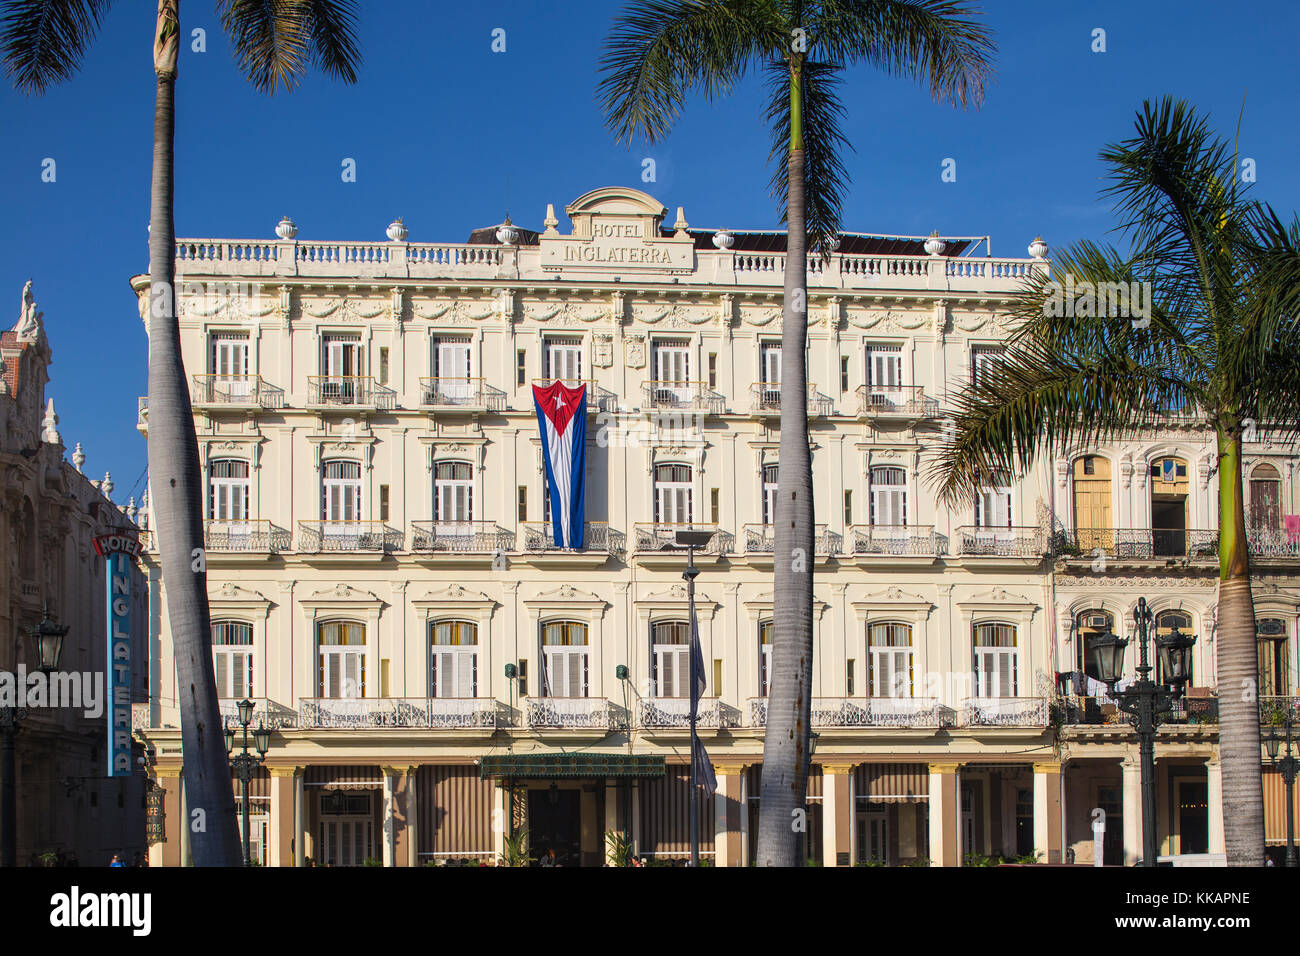 Hotel Inglaterra, Parque Central, l'Avana, Cuba, Indie occidentali, America centrale Foto Stock